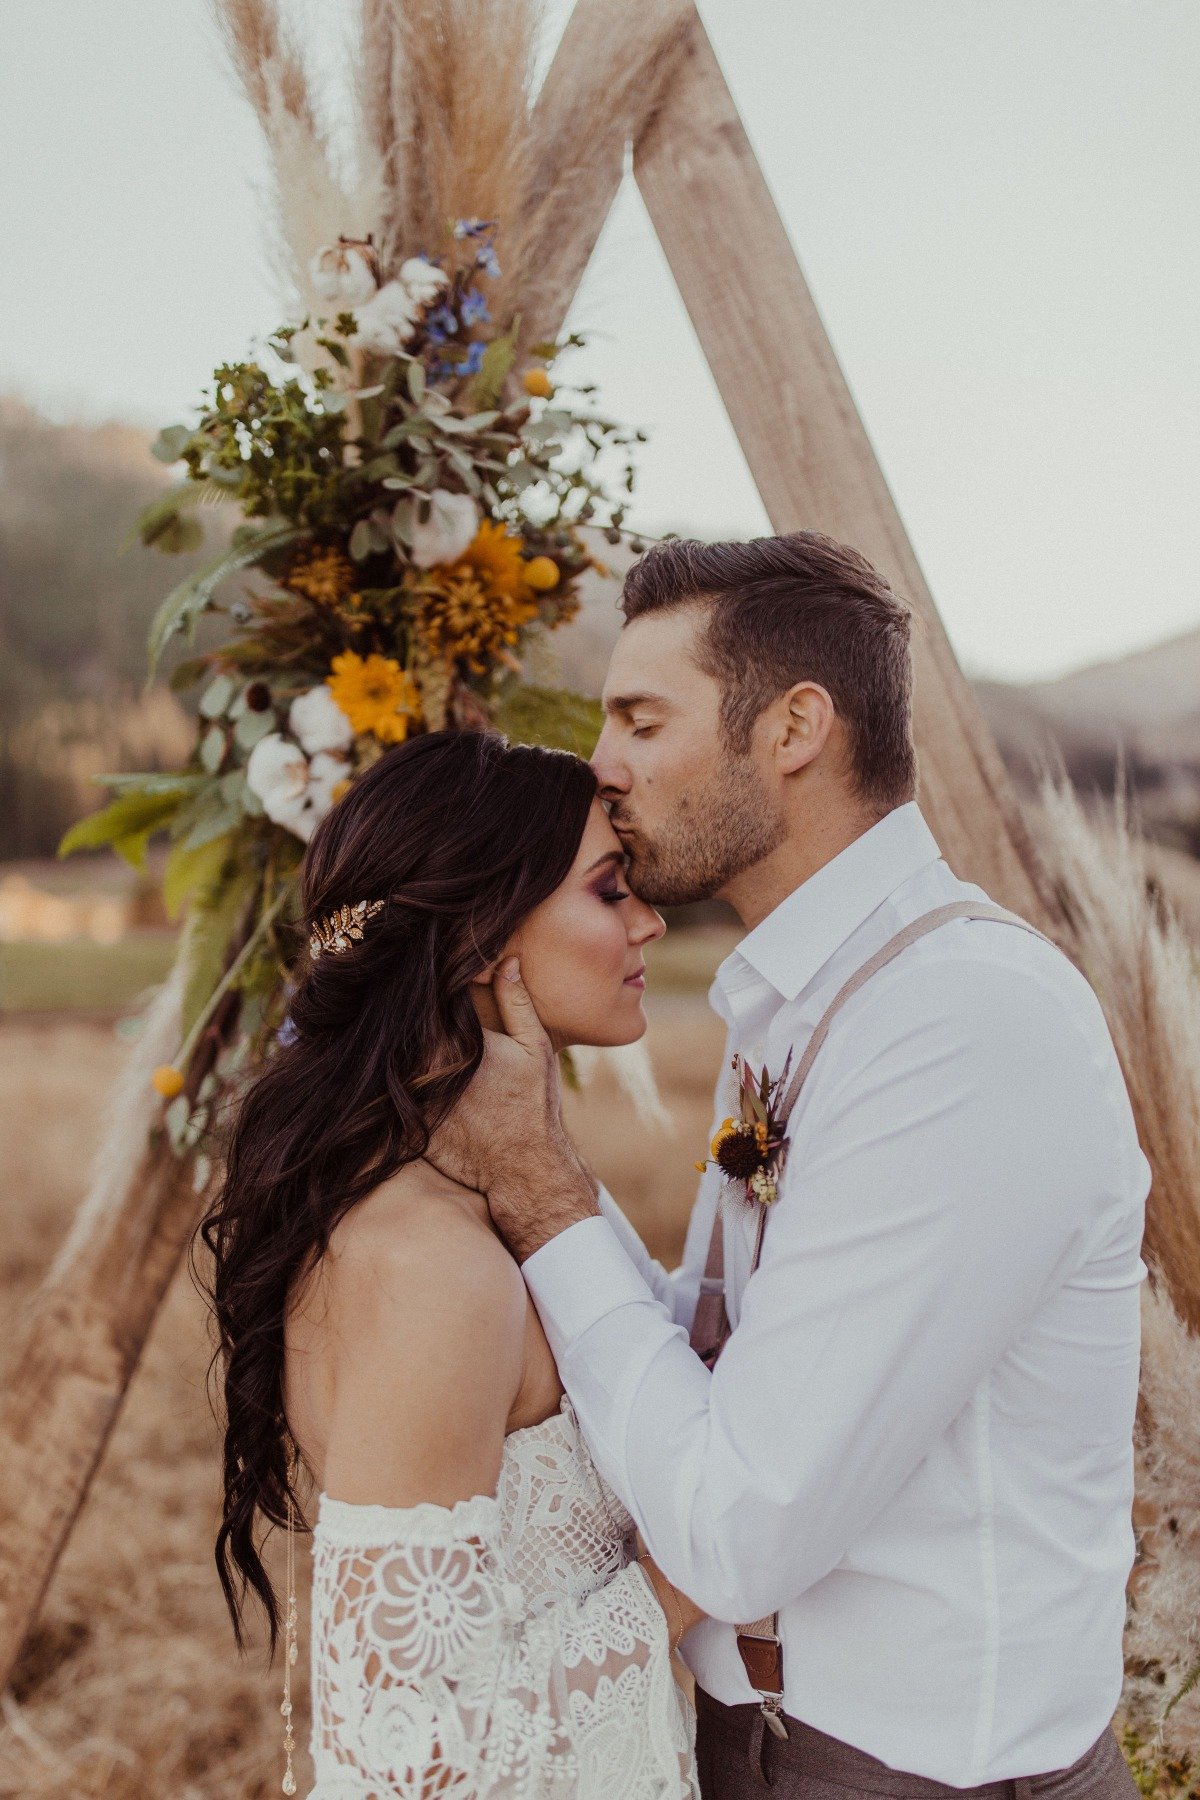 The Bachelorette Becca Kufrin & Garrett Yrigoyen Wedding Inspiration